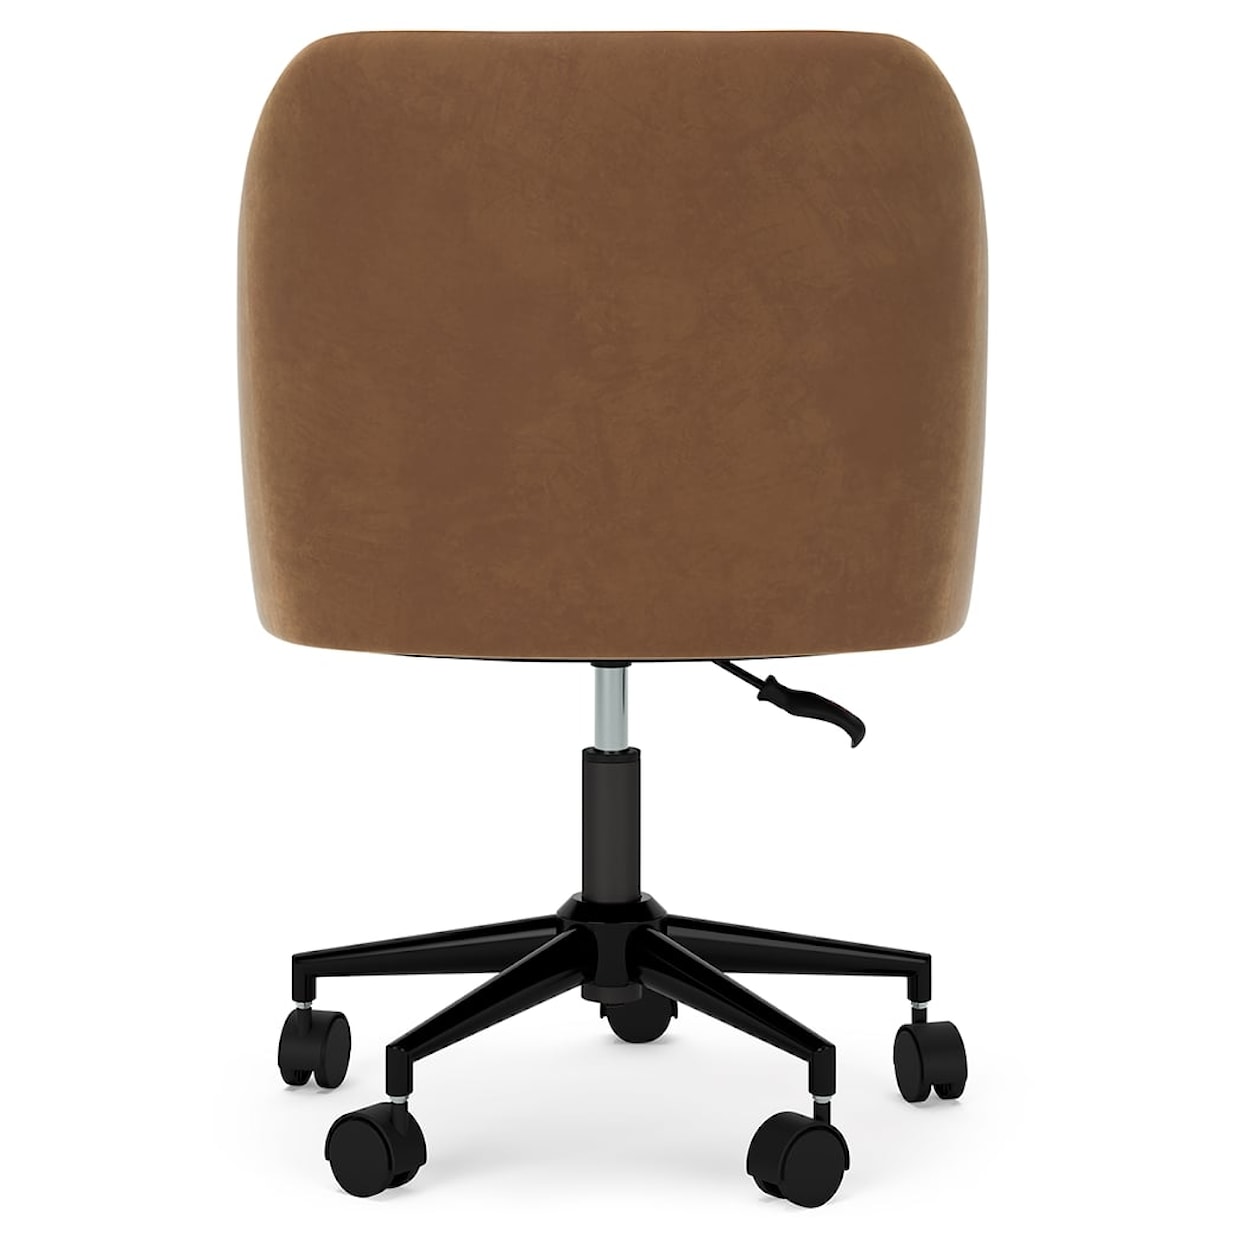 Ashley Signature Design Austanny Home Office Desk Chair